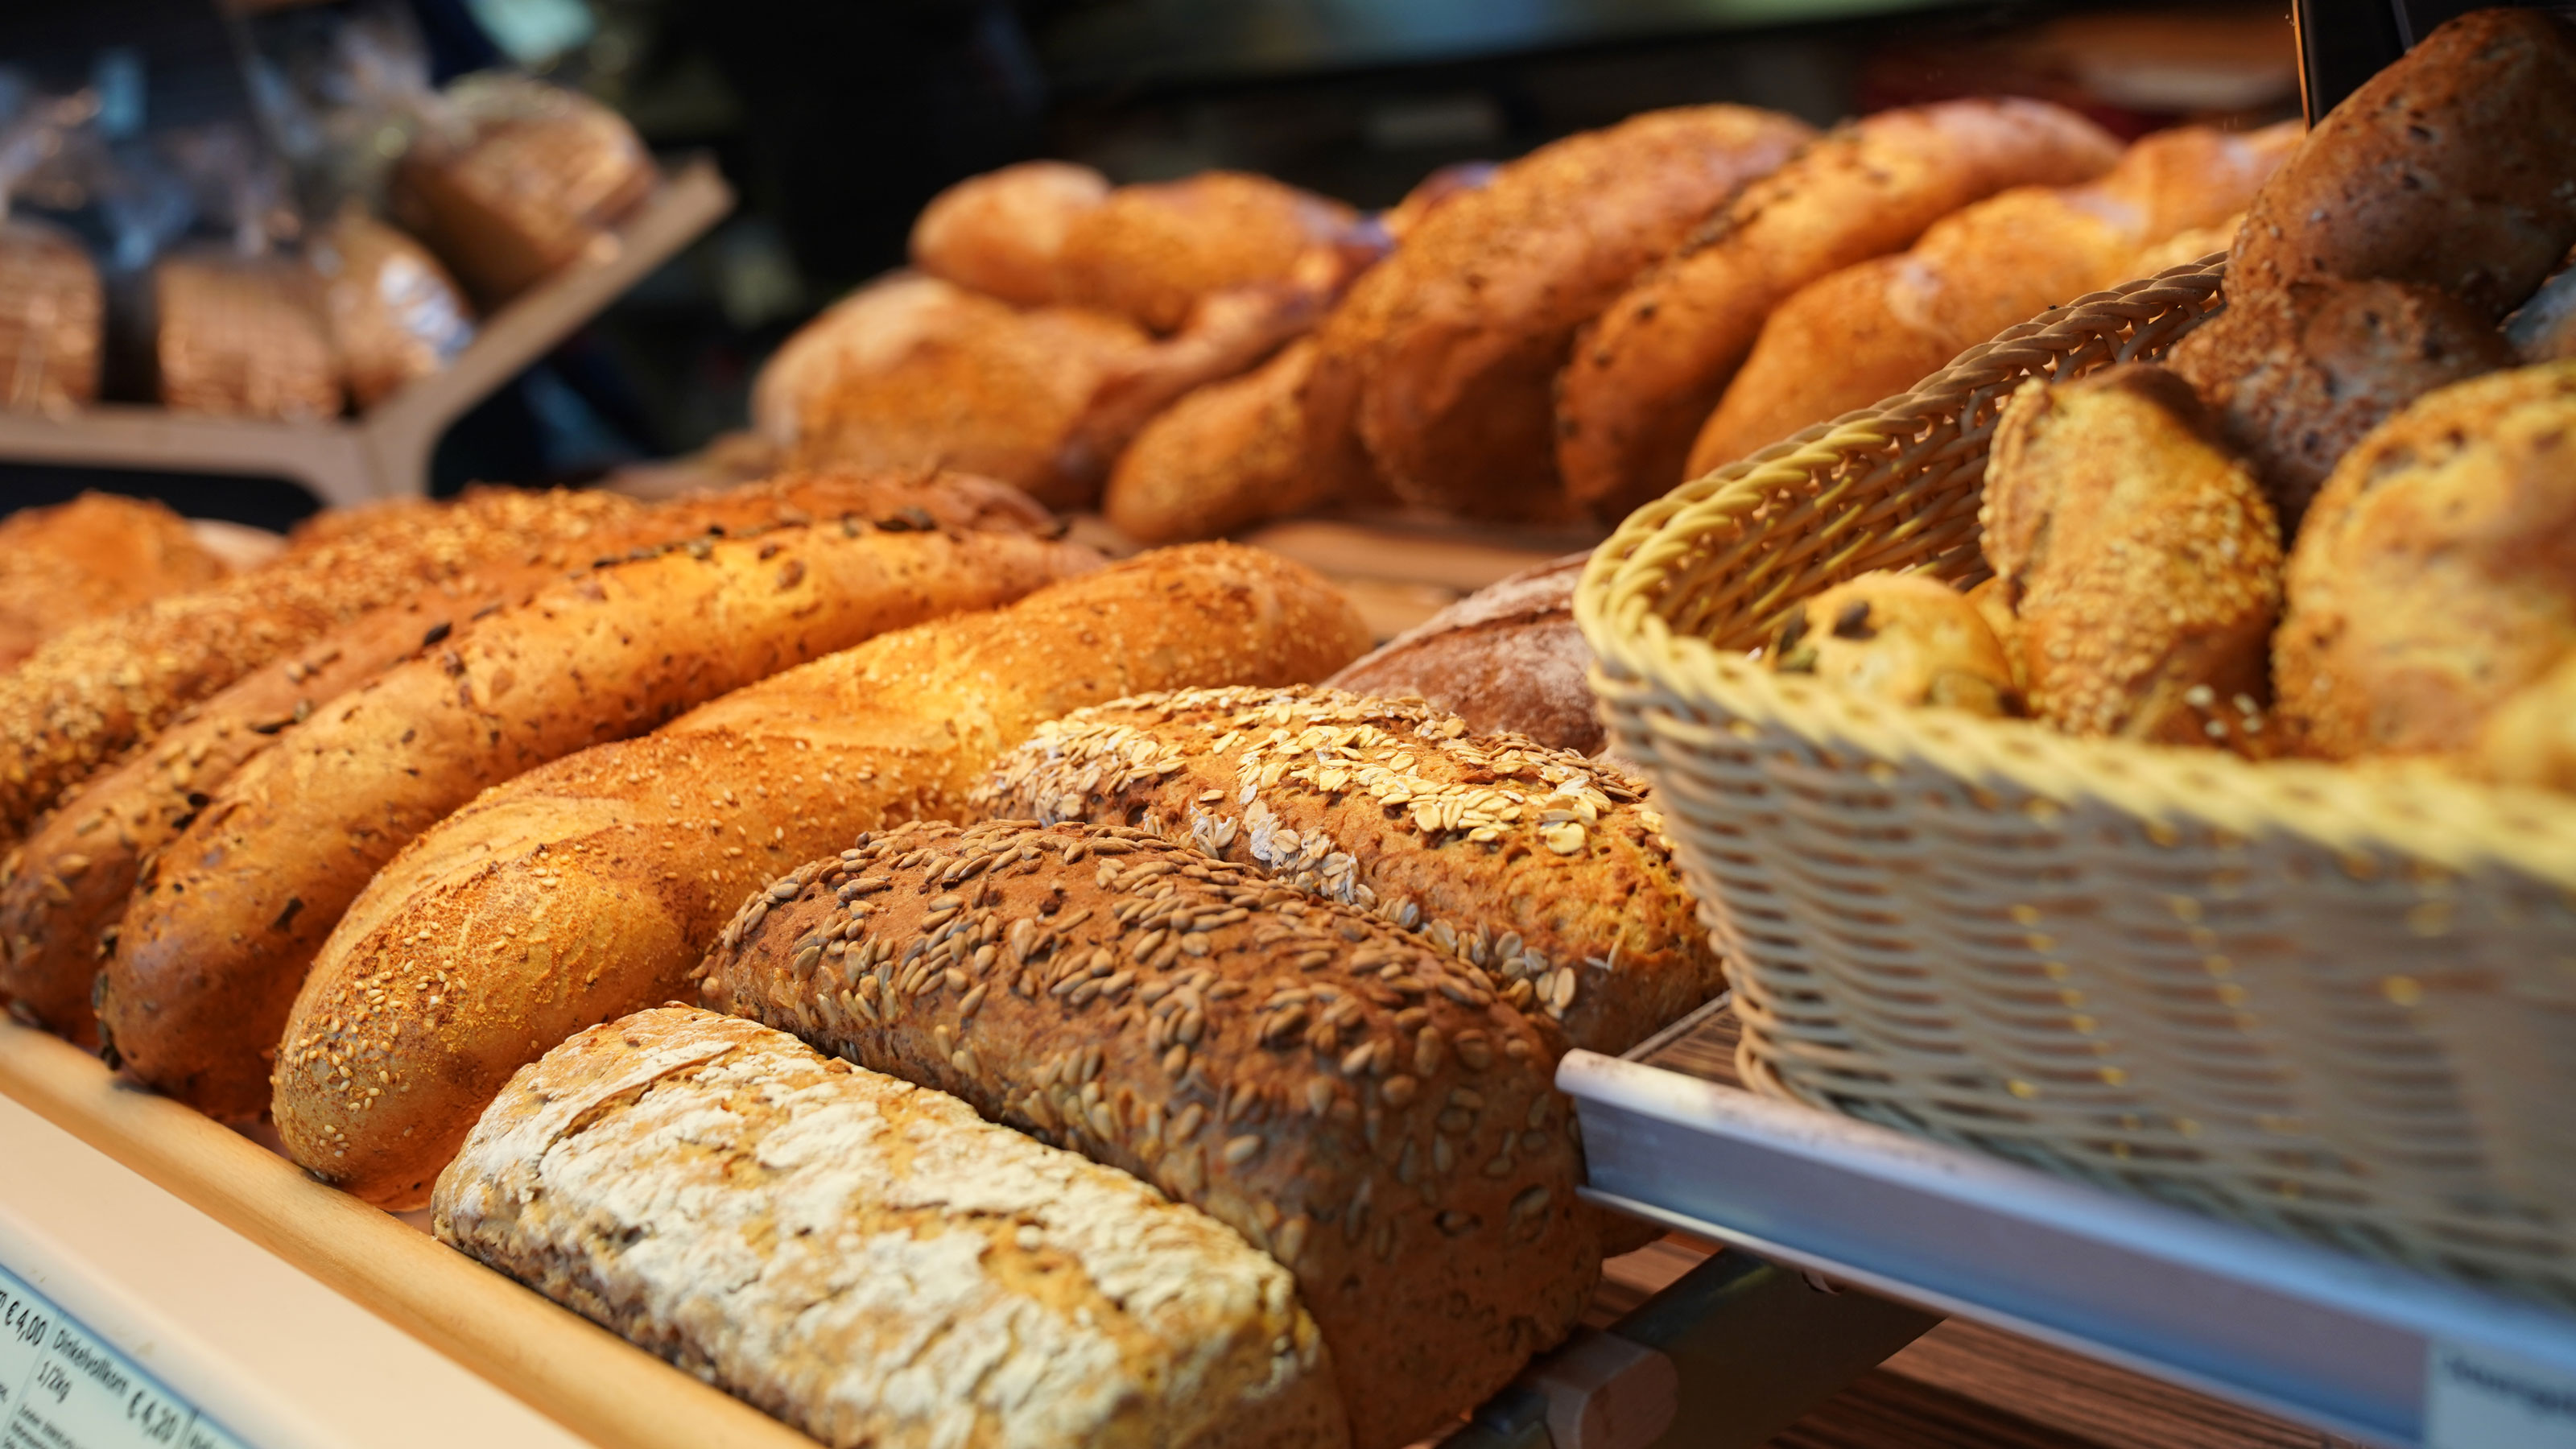 Brotsortiment der Bäckerei „Gurgltalbrot“ in Nassereith